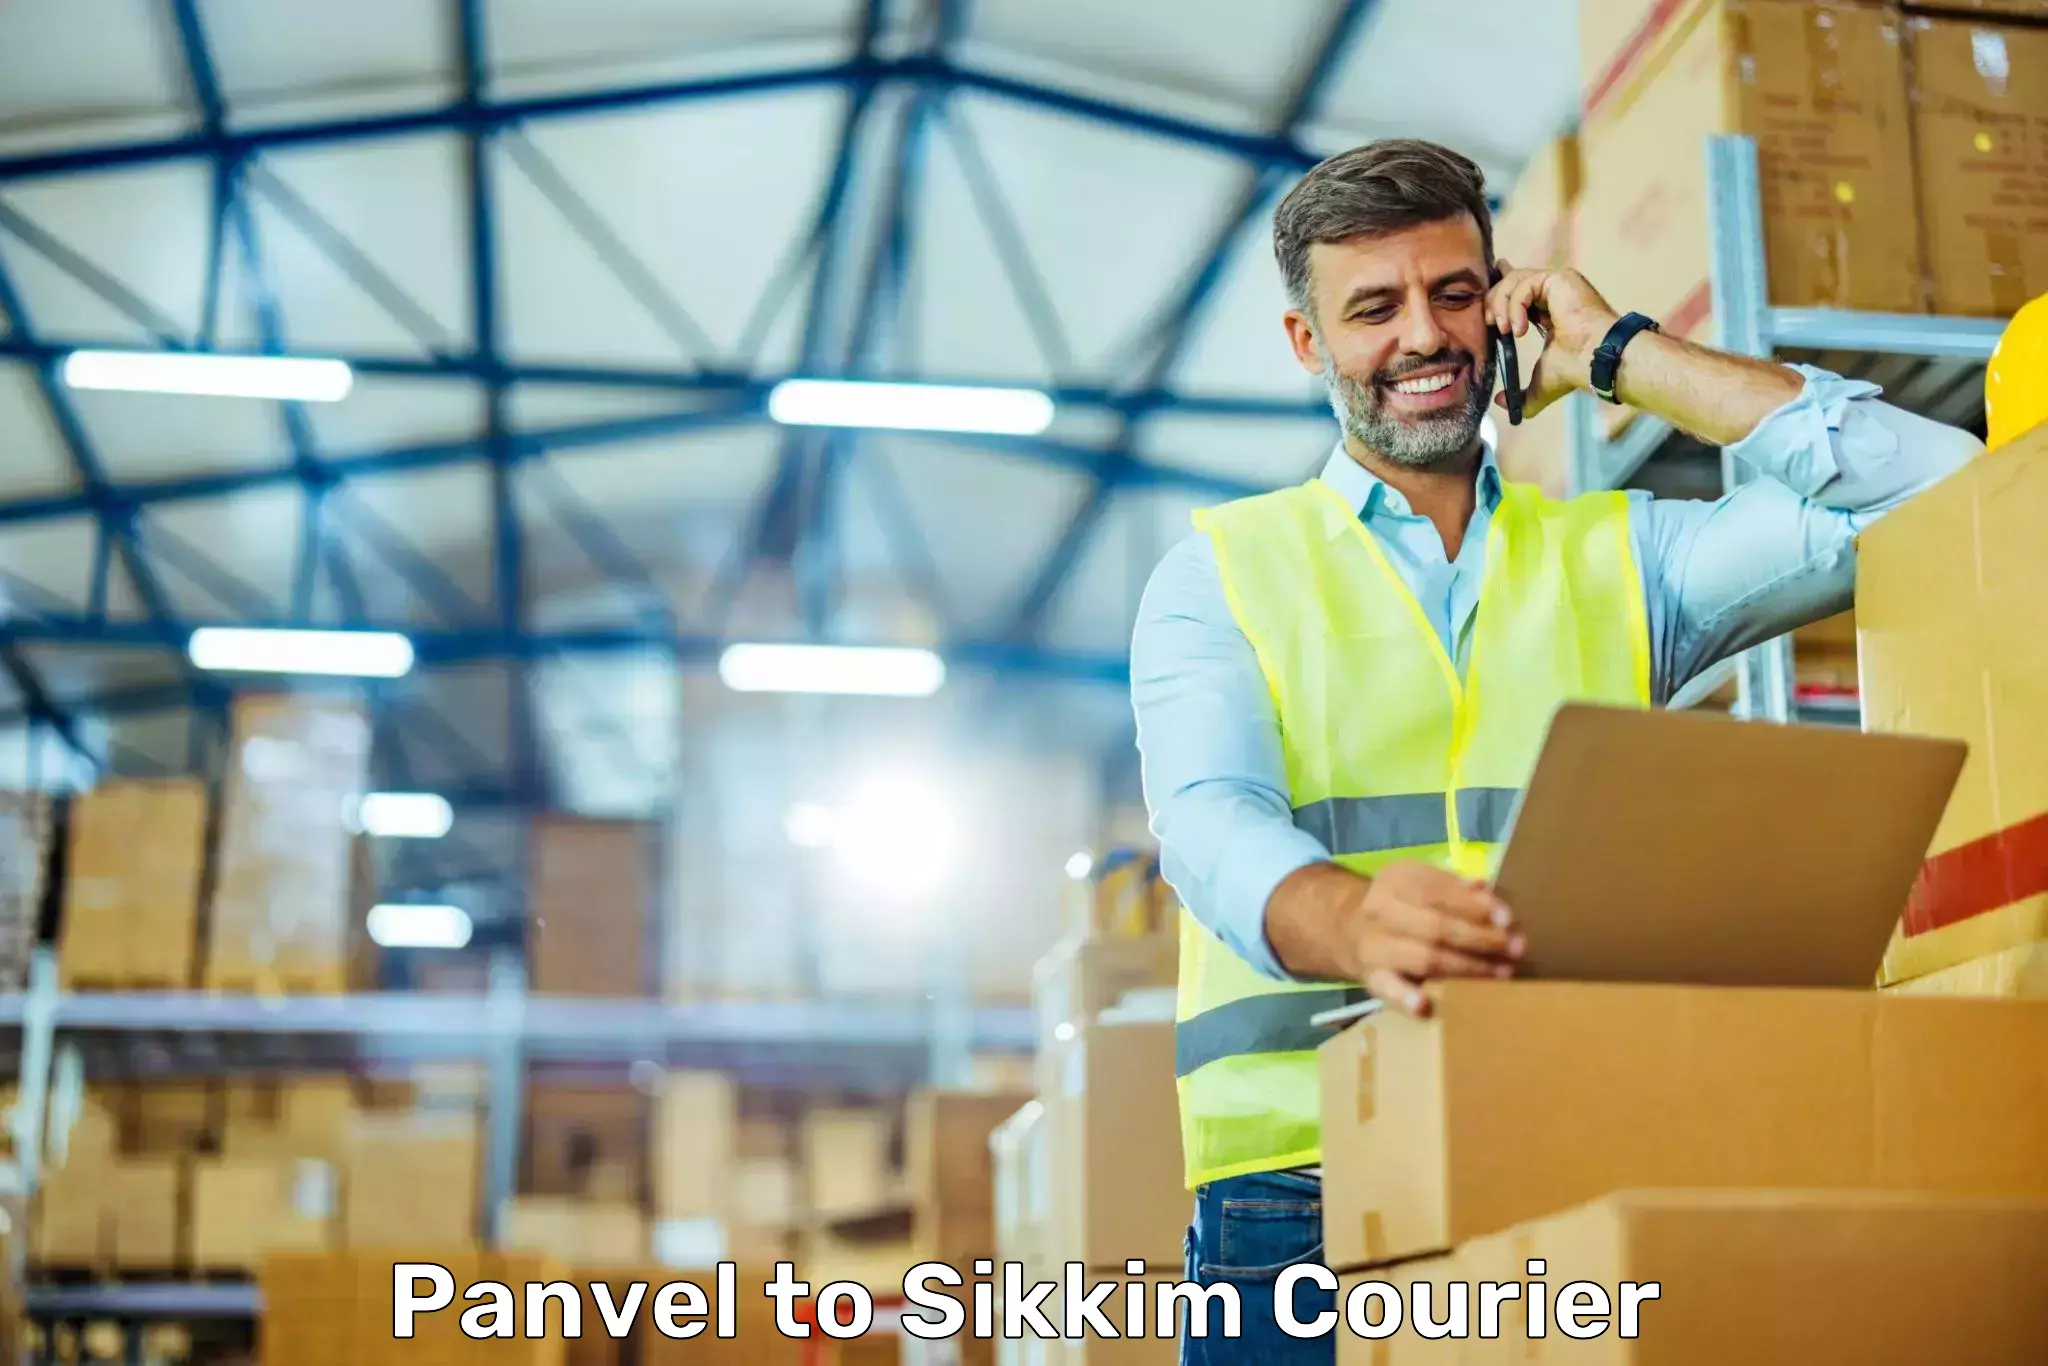 Logistics service provider Panvel to Sikkim